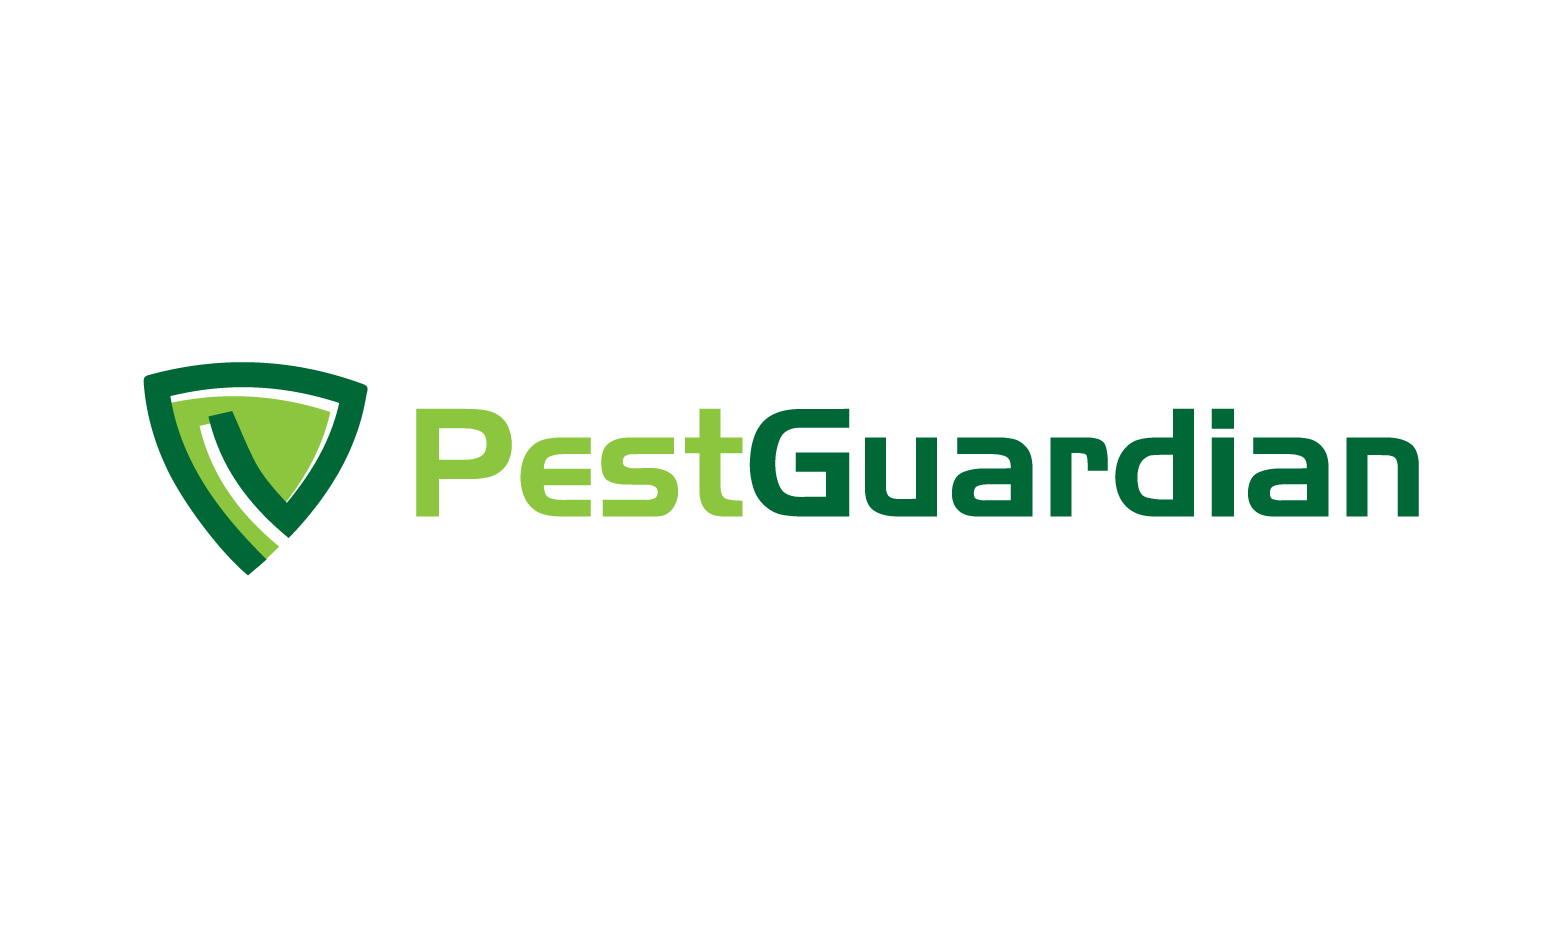 PestGuardian.com - Creative brandable domain for sale